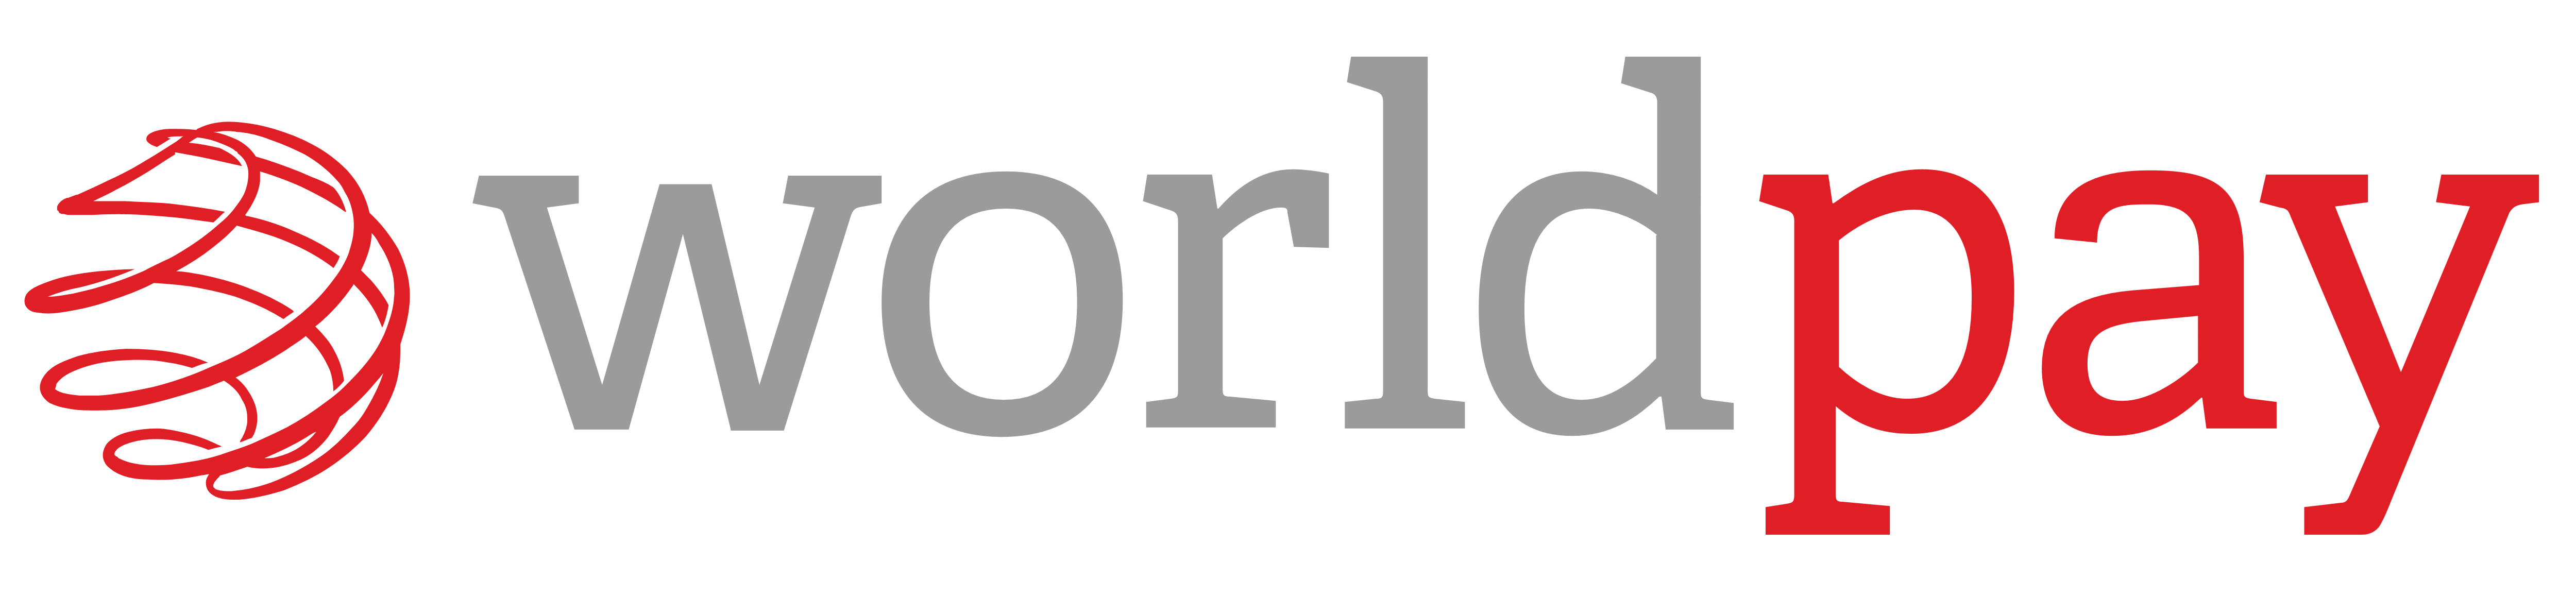 Worldpay_logo